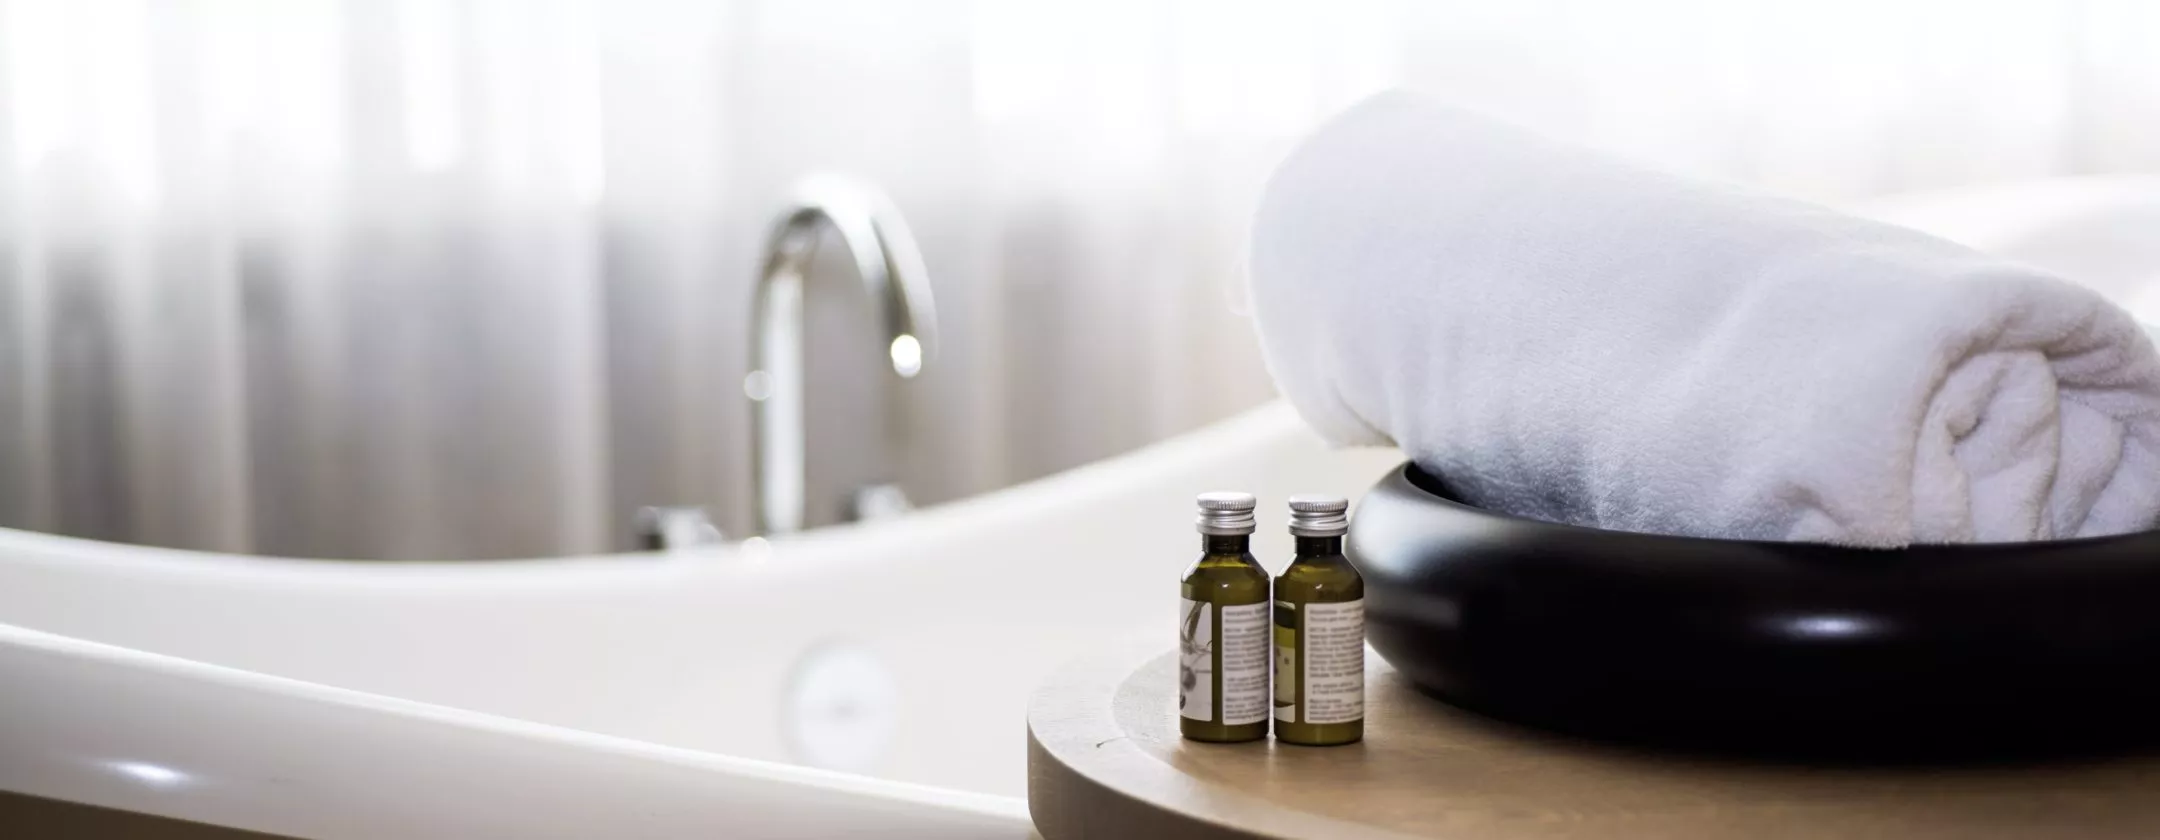 Bath Aromatherapy Spa Relaxation